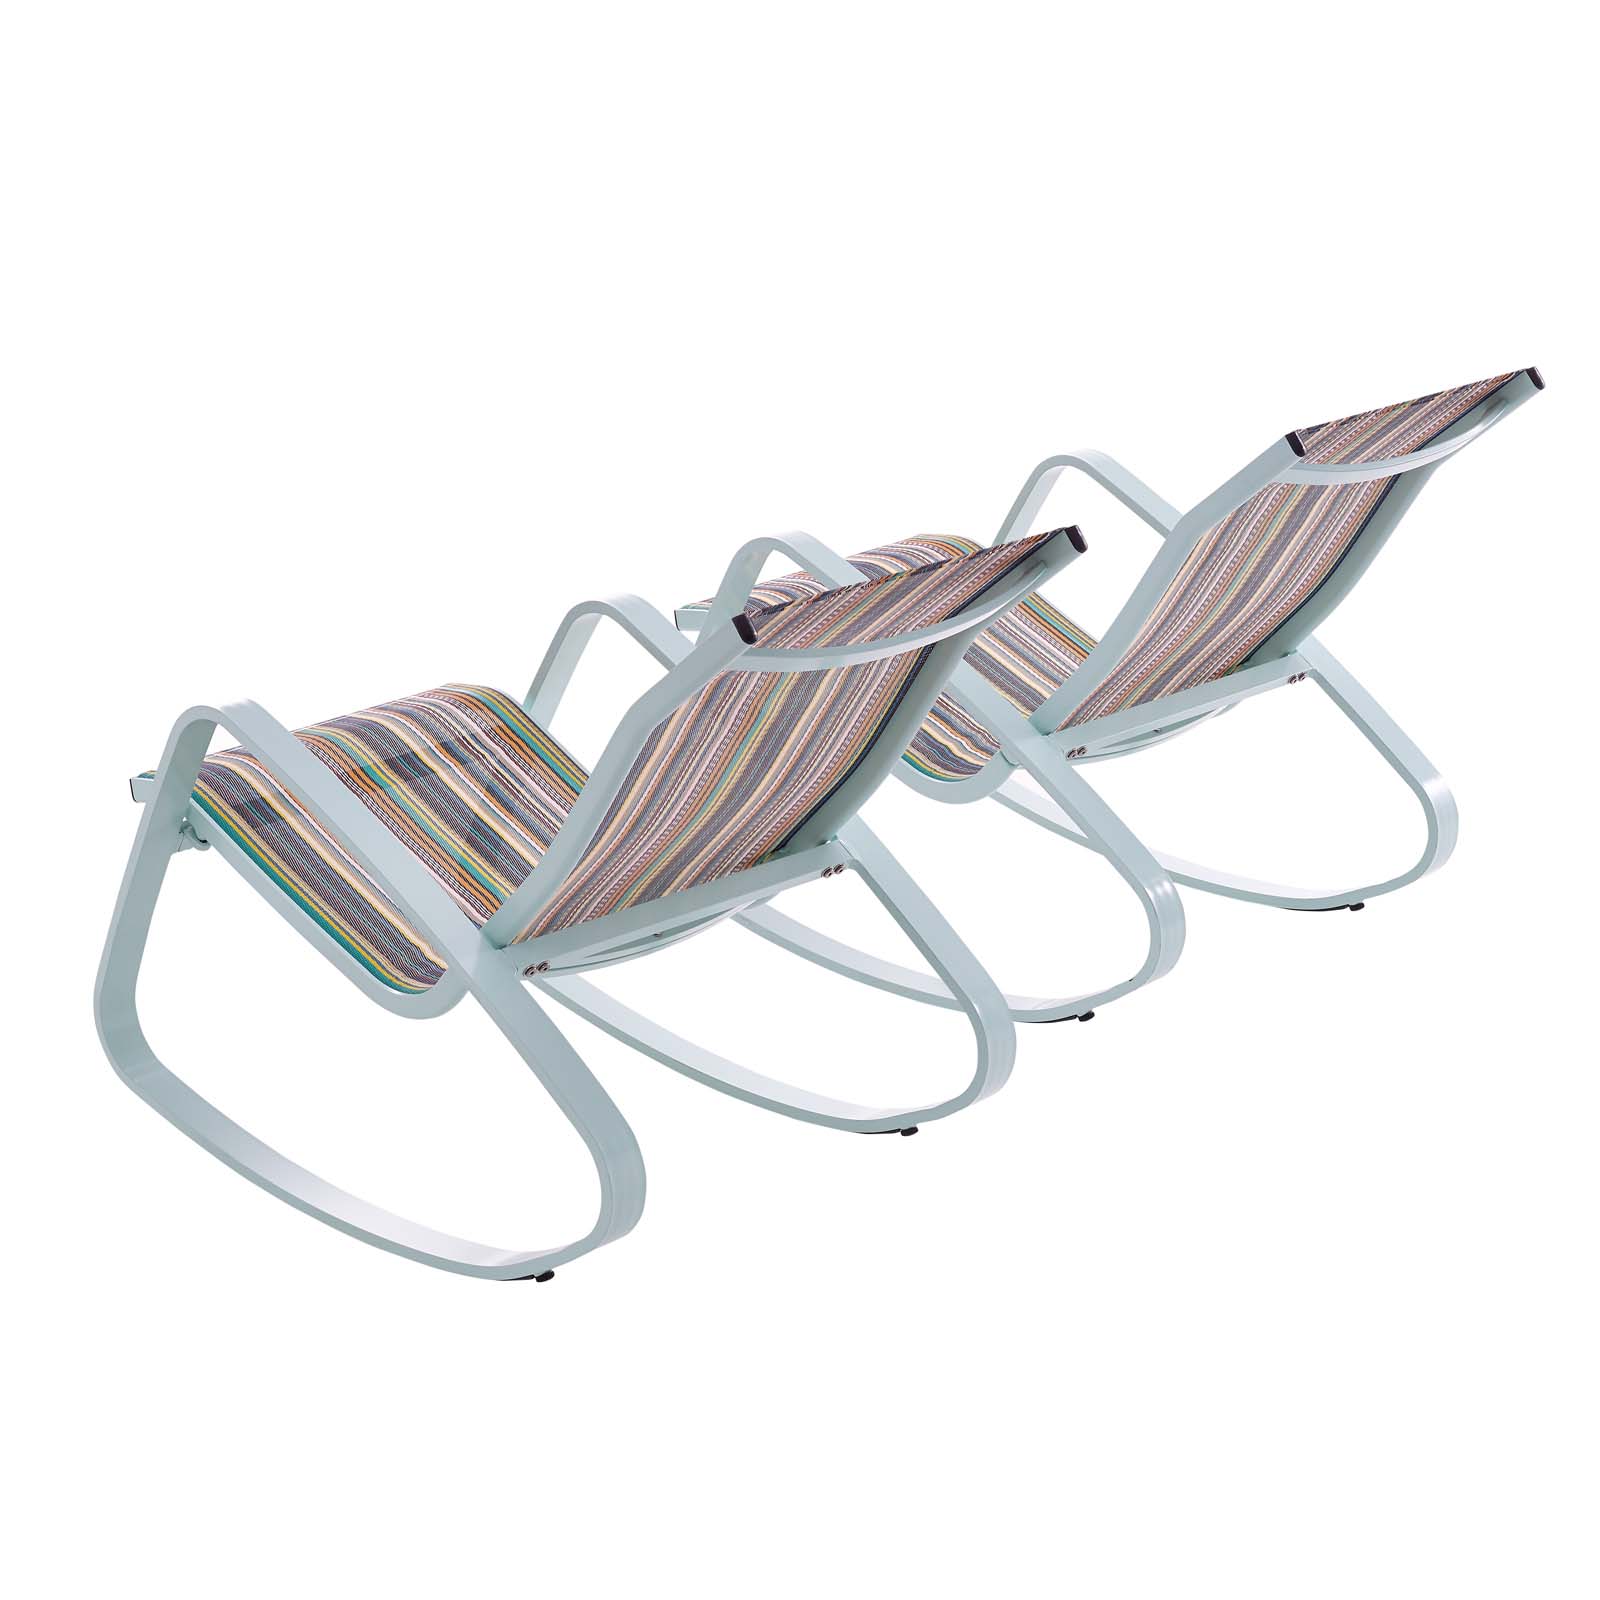 Modway Traveler Rocking Lounge Chair Outdoor Patio Mesh Sling Set of 2 in Green Stripe - image 3 of 6